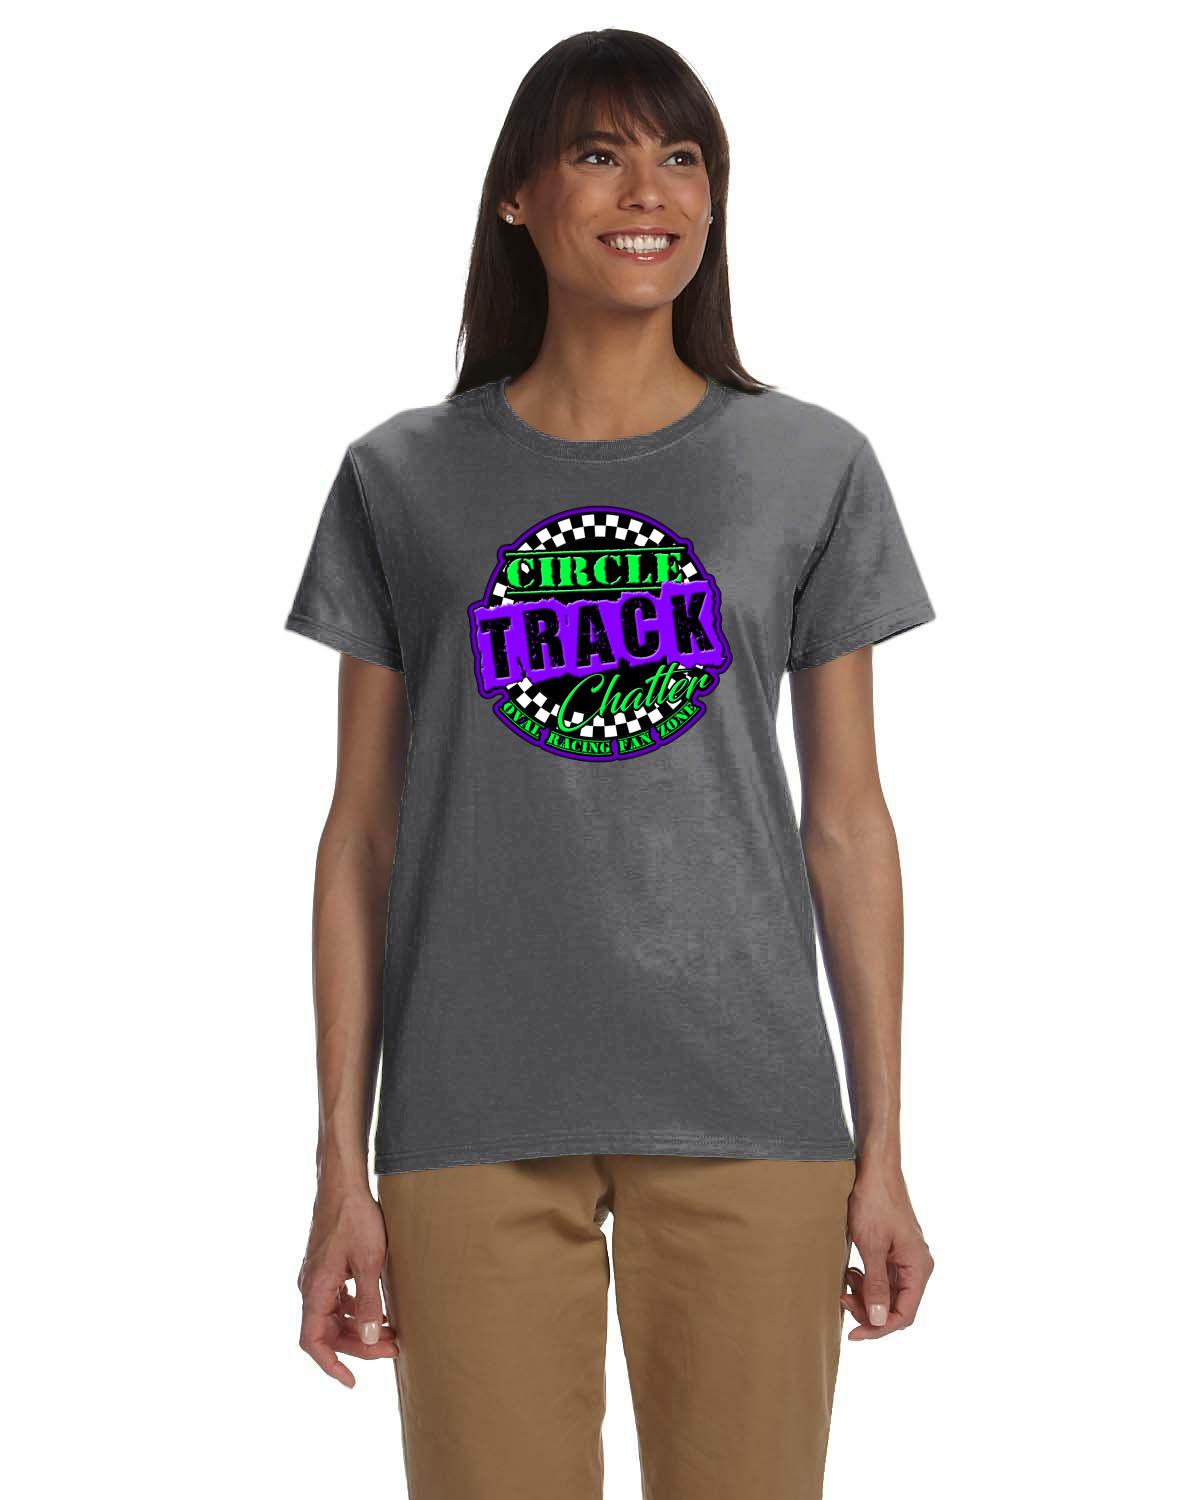 Circle Track Chatter Ladies' T-Shirt